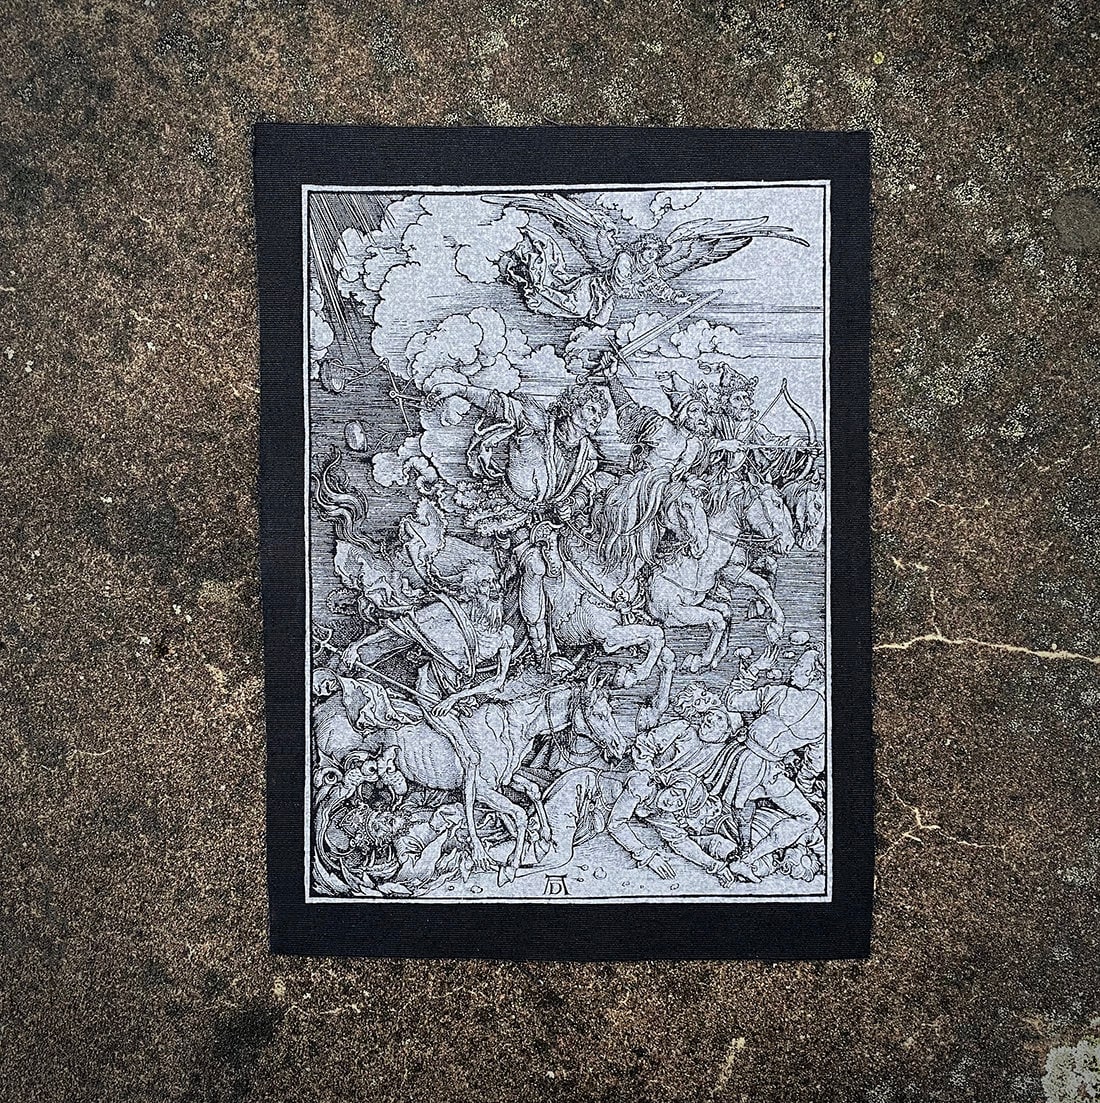 Four Horsemen of the Apocalypse, woodcut illustration by Albrecht Dürer - BACK PATCH